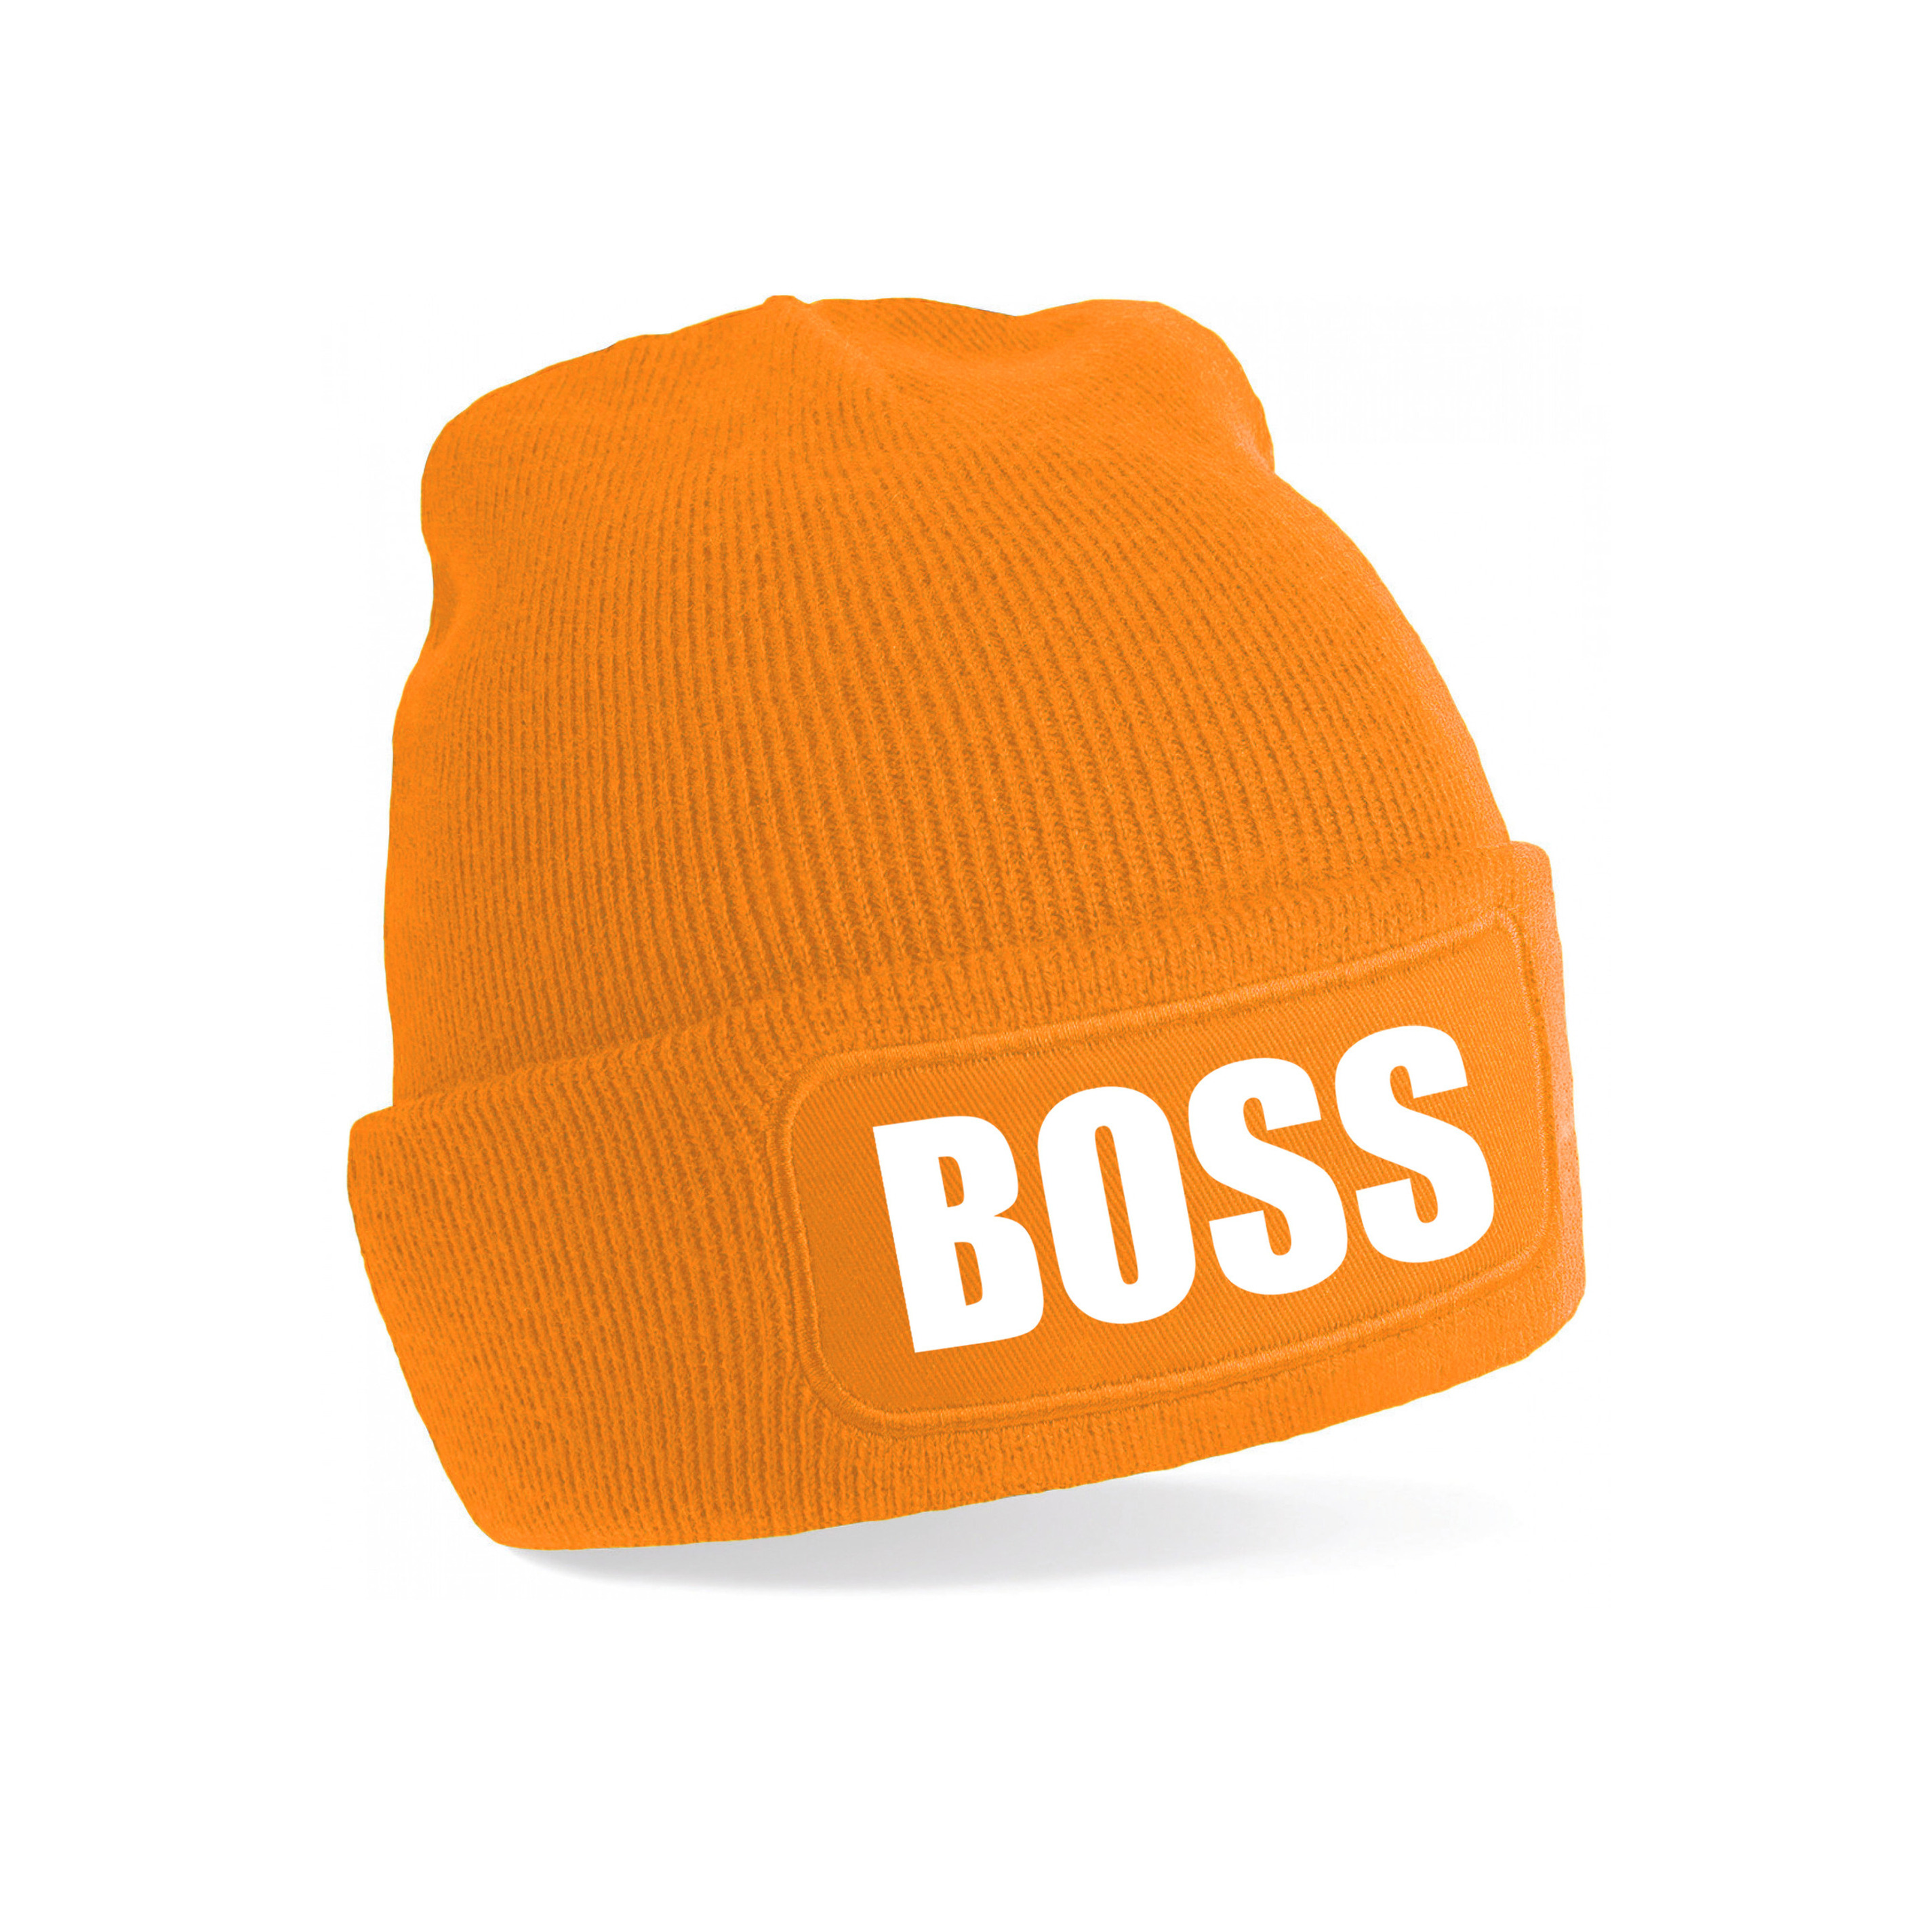 Baas muts voor volwassenen oranje boss-baas wintermuts beanie one size unisex